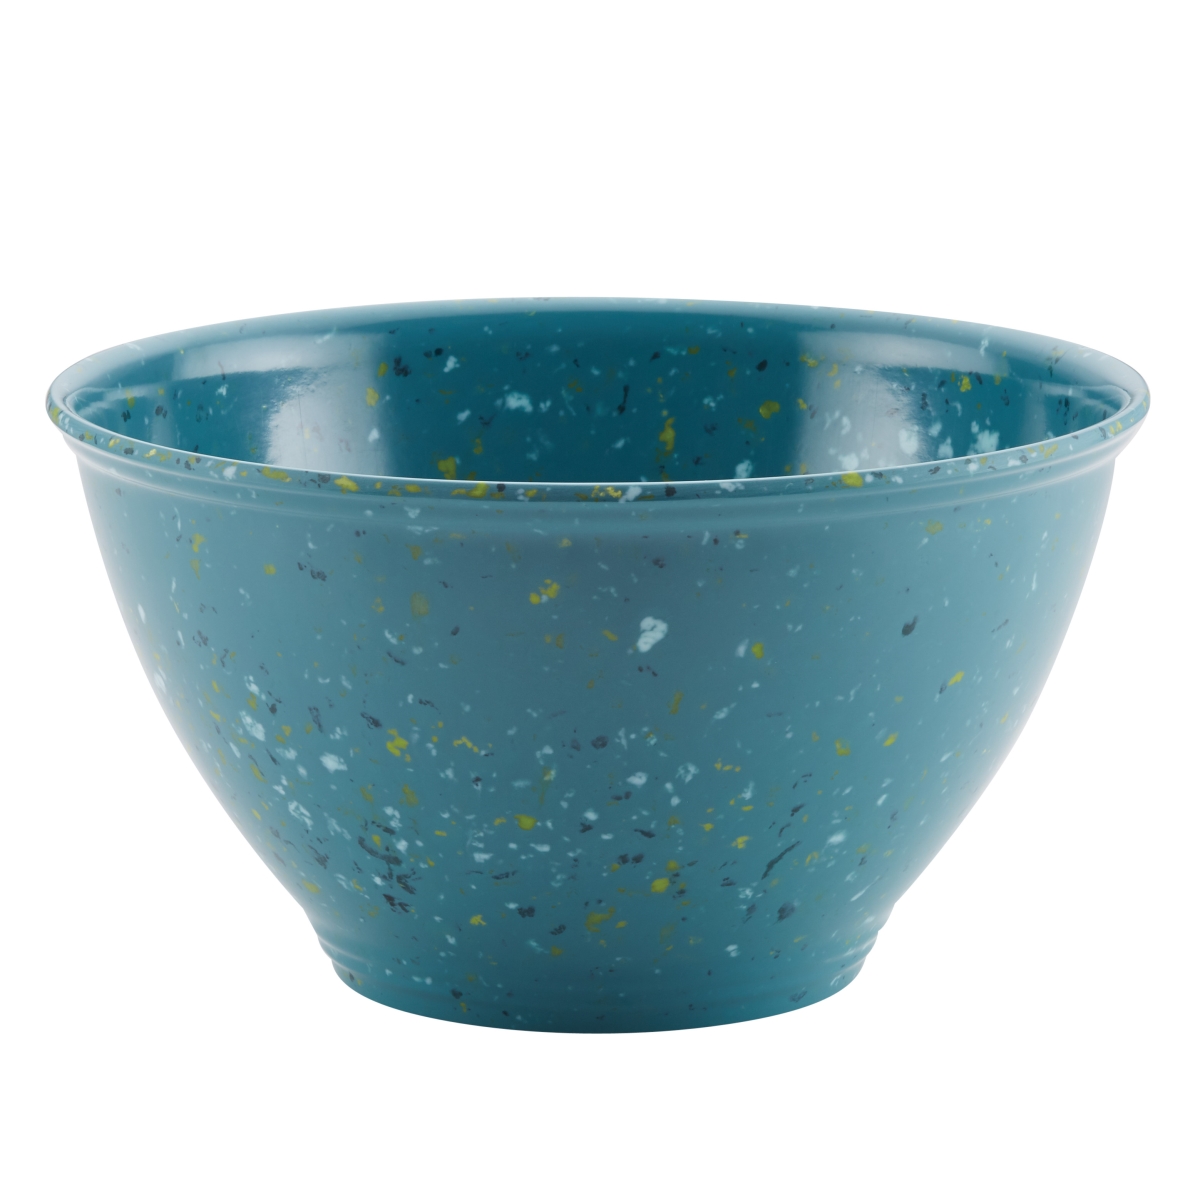 47553 Kitchenware Garbage Bowl, Agave Blue